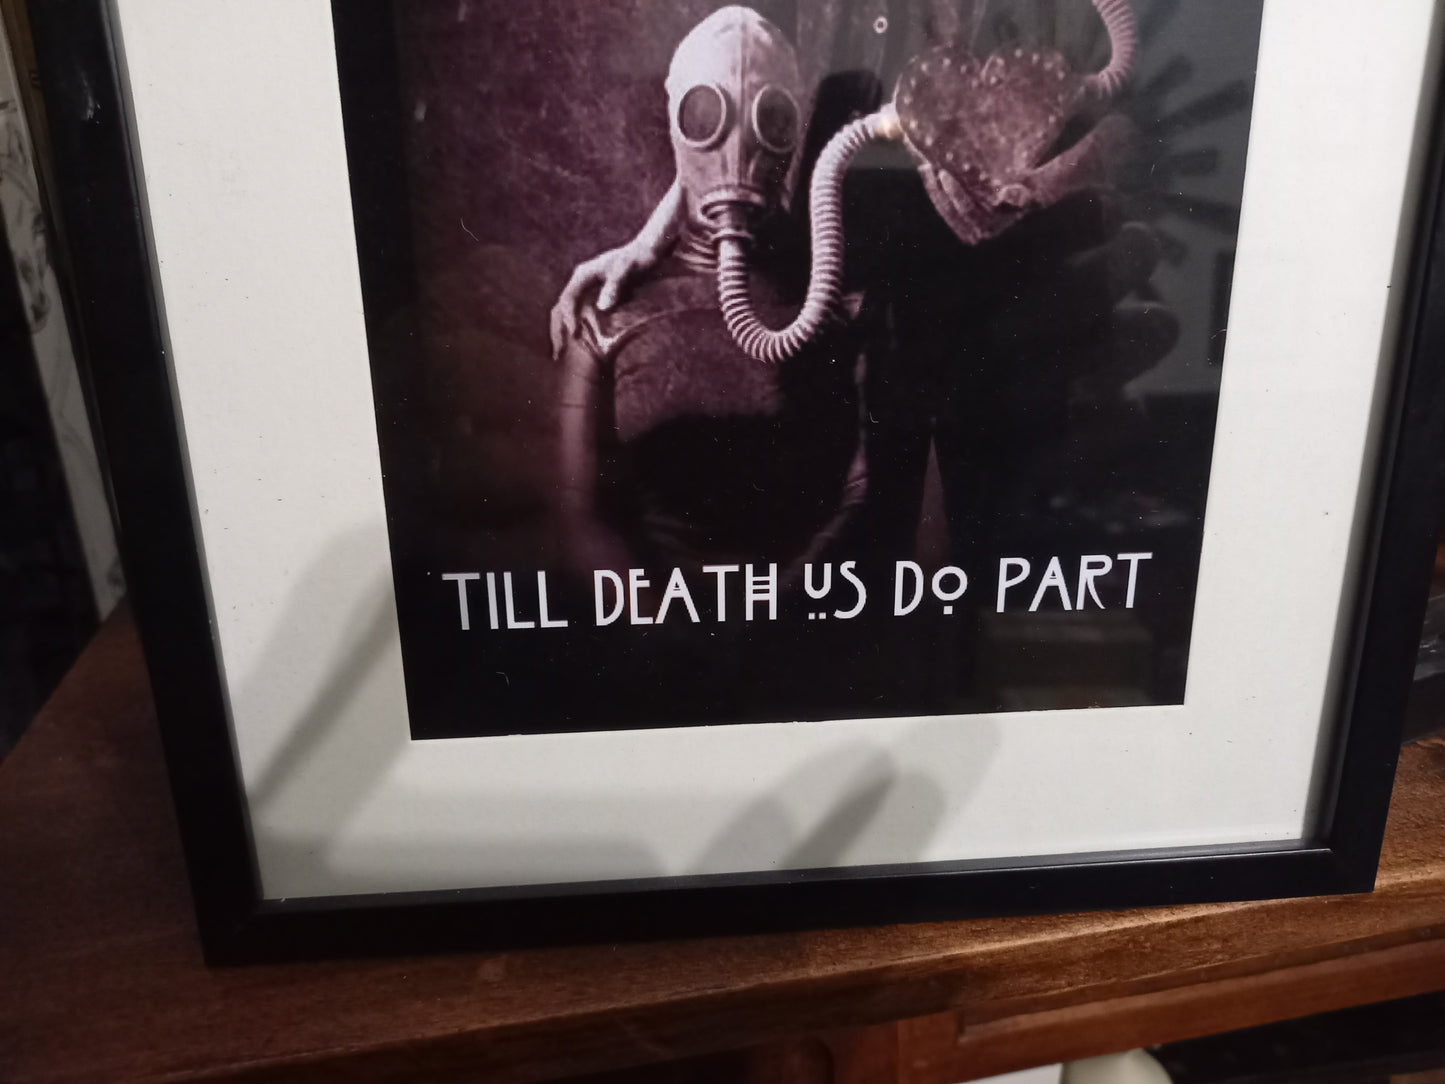 Oddity Curiosity macabre fetish BDSM romantic goth gothic witchy "Till Death us do Part" framed art